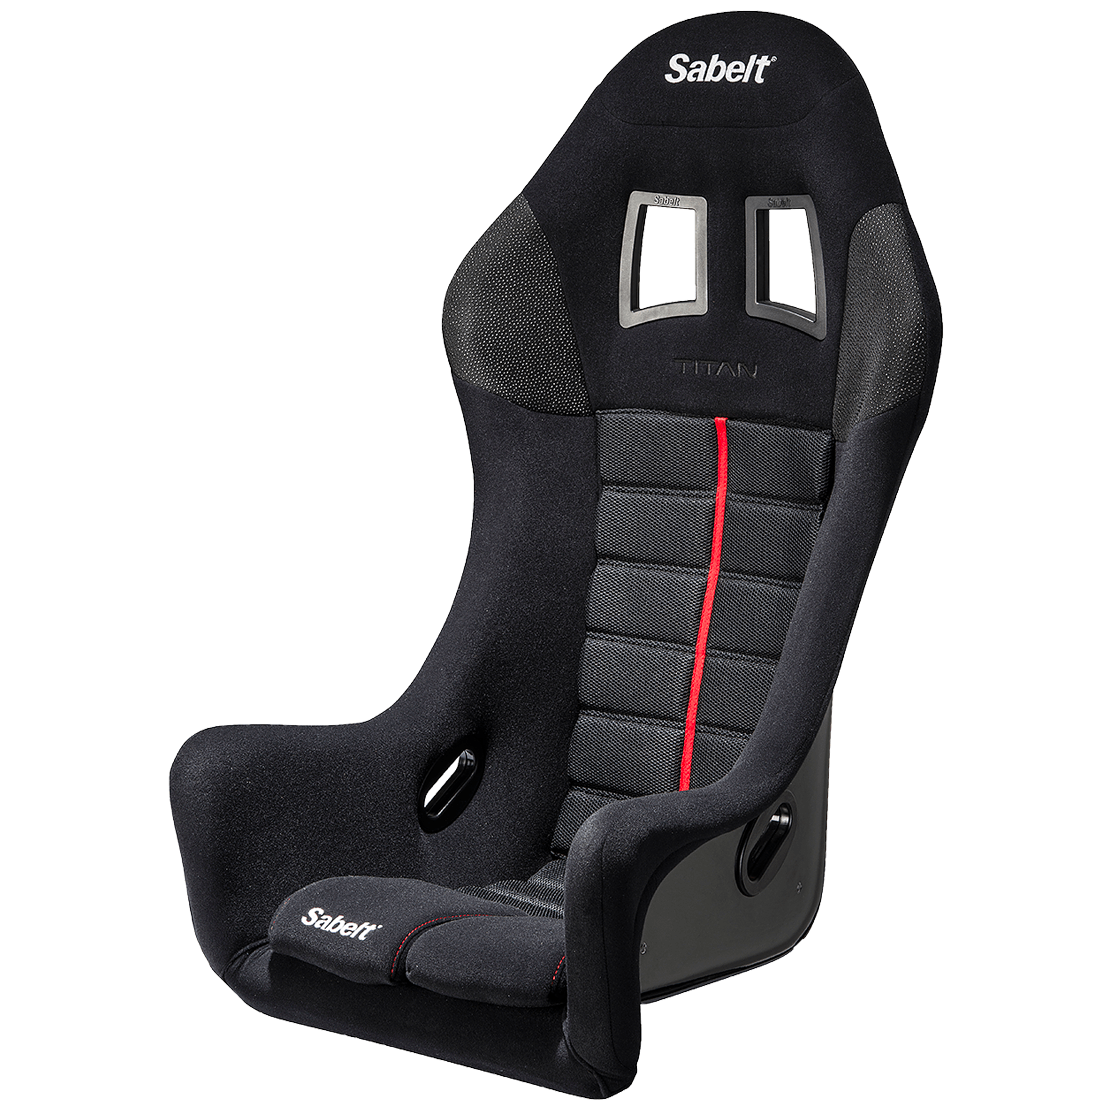 Sabelt Titan Max Racing Seat